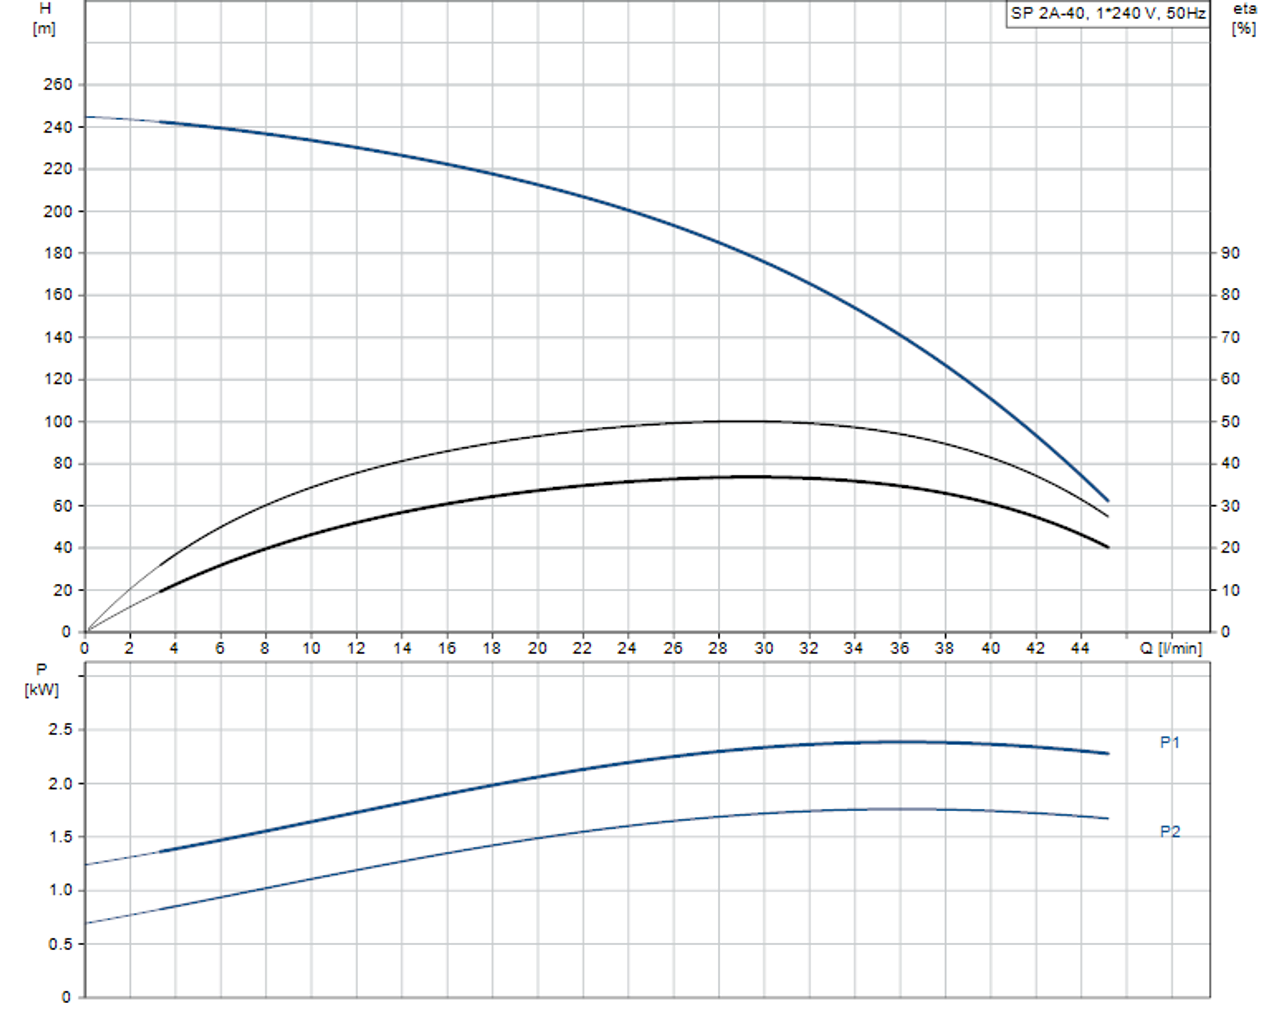 SP 2A-40 Performance Curve